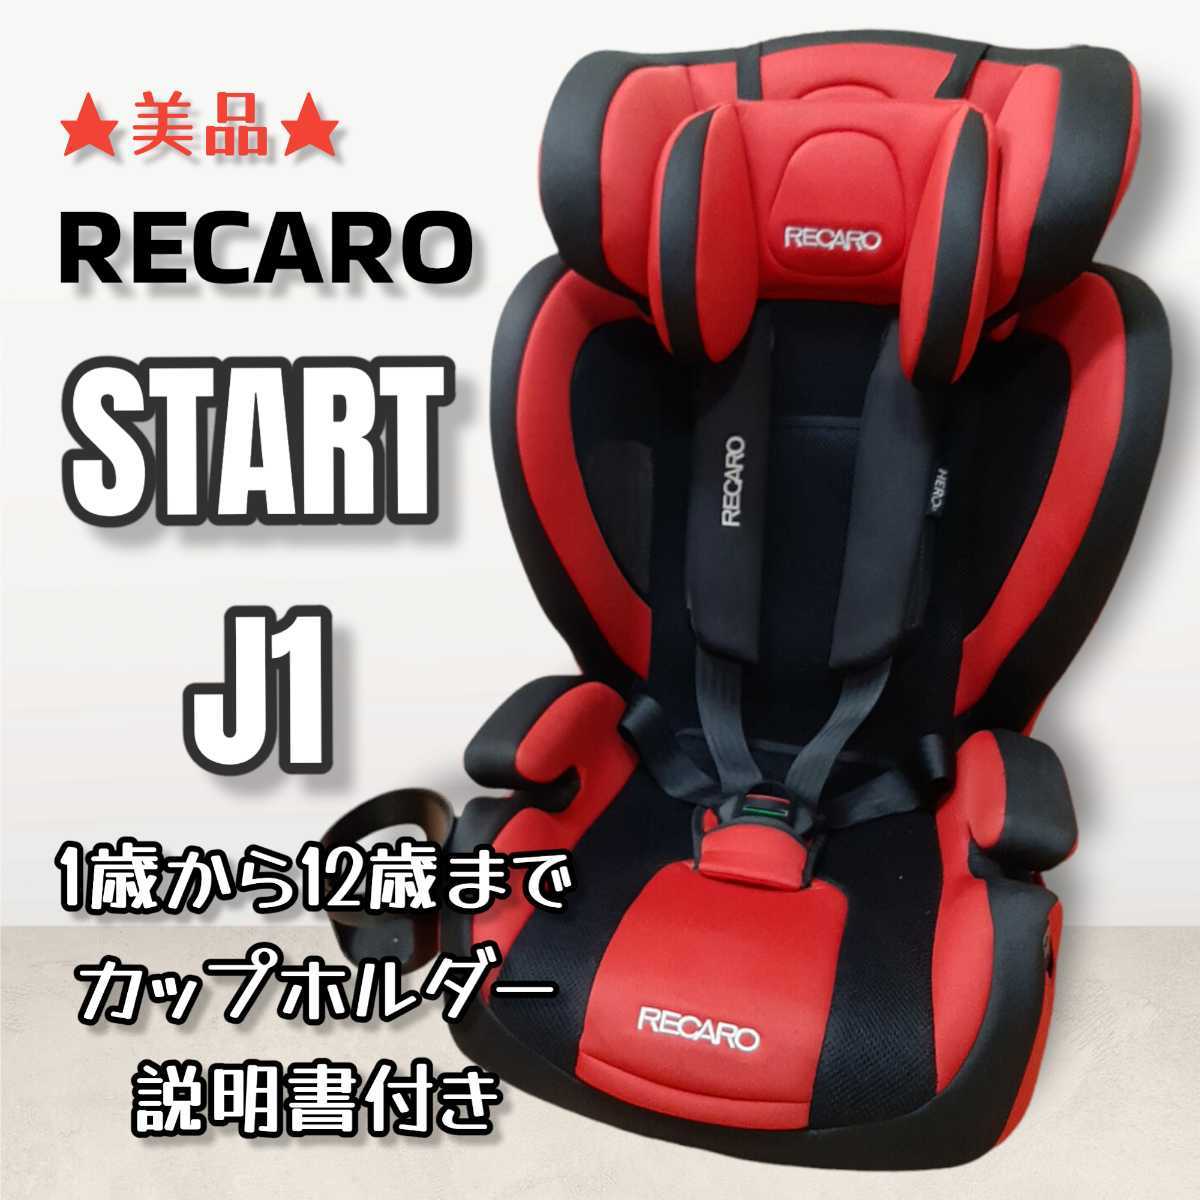 RECARO START レカロ スタート J1 チャイルドシート - 通販 - csa 